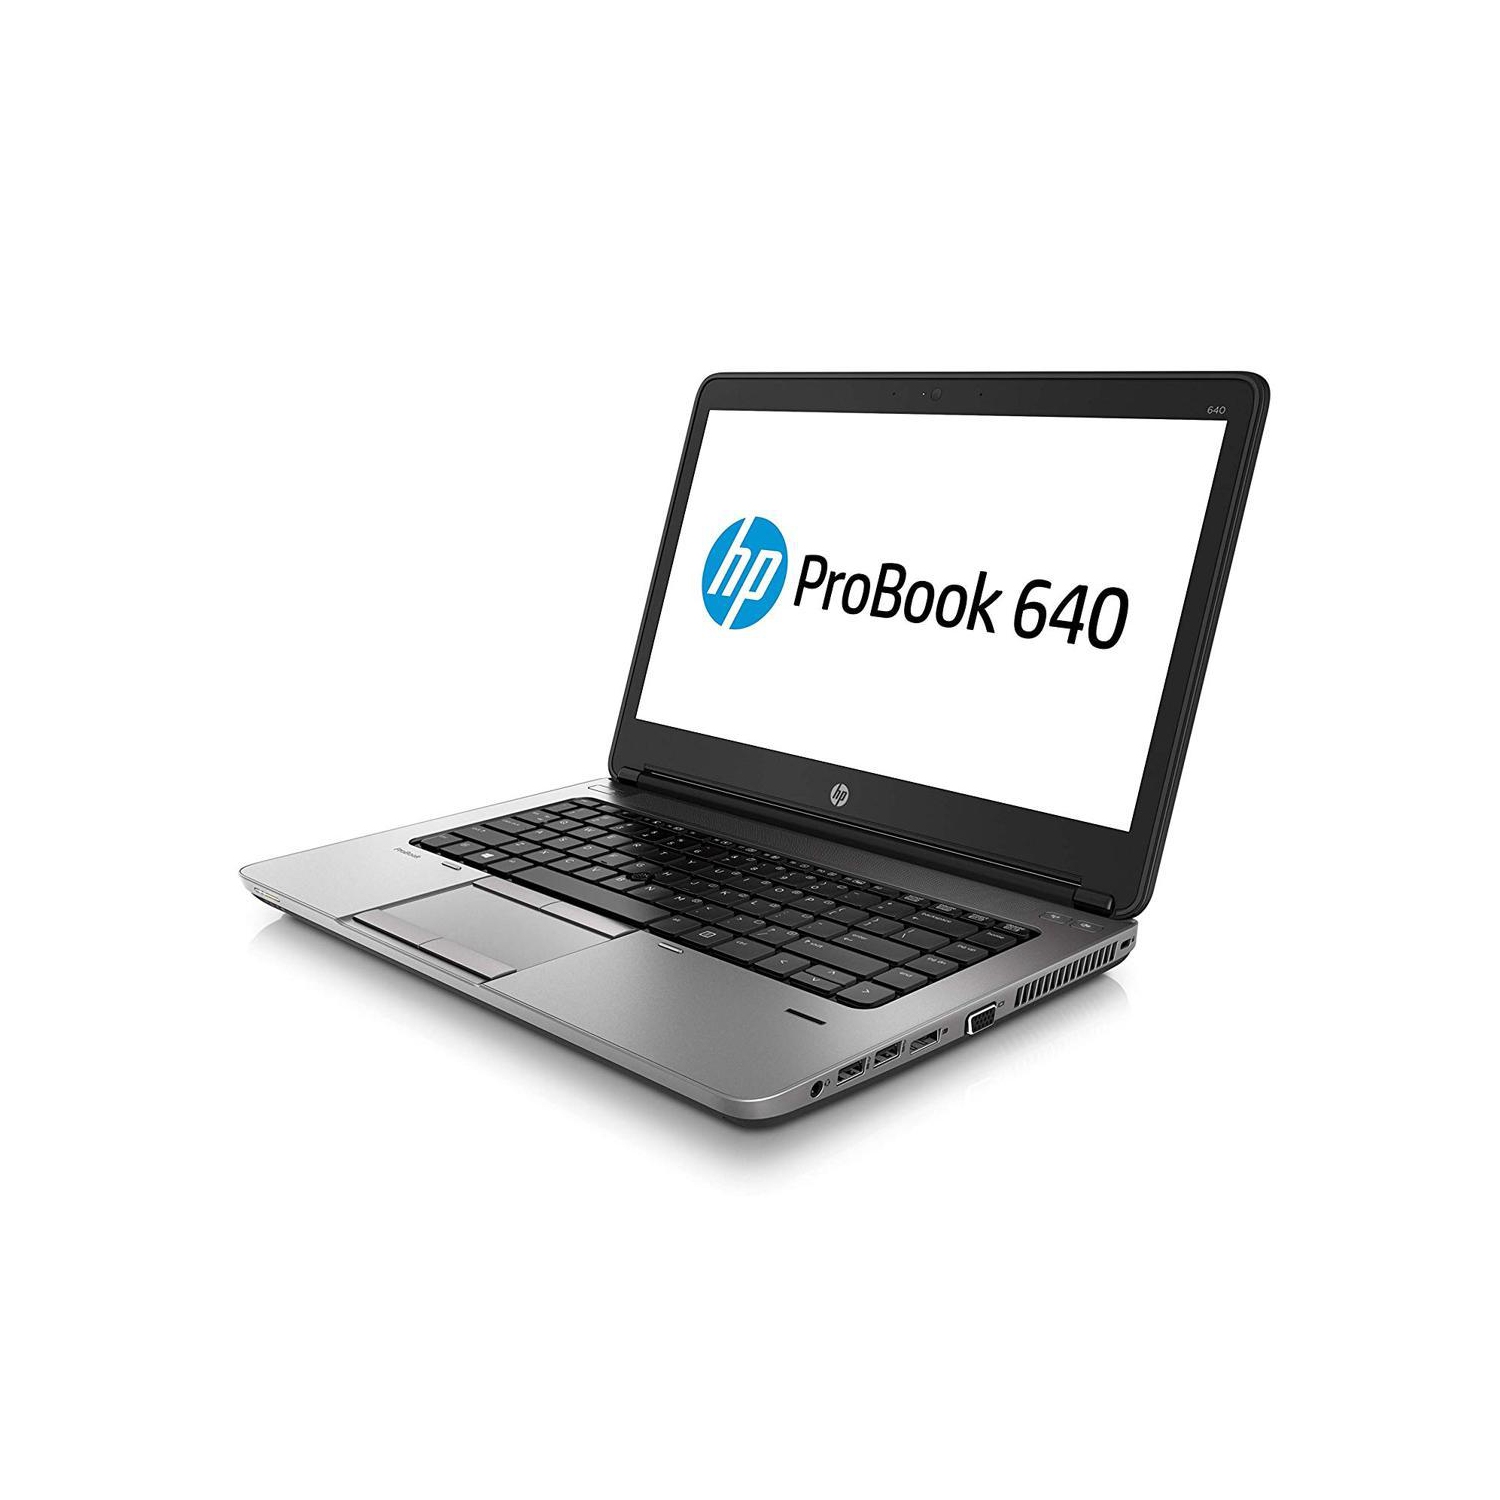 Refurbished (Excellent) - HP ProBook 640 G1 Laptop: Intel Core i5 4200M 2.50GHz, 8GB RAM, 250 GB SSD, 14", Win 10 Pro -Certified Refurbished